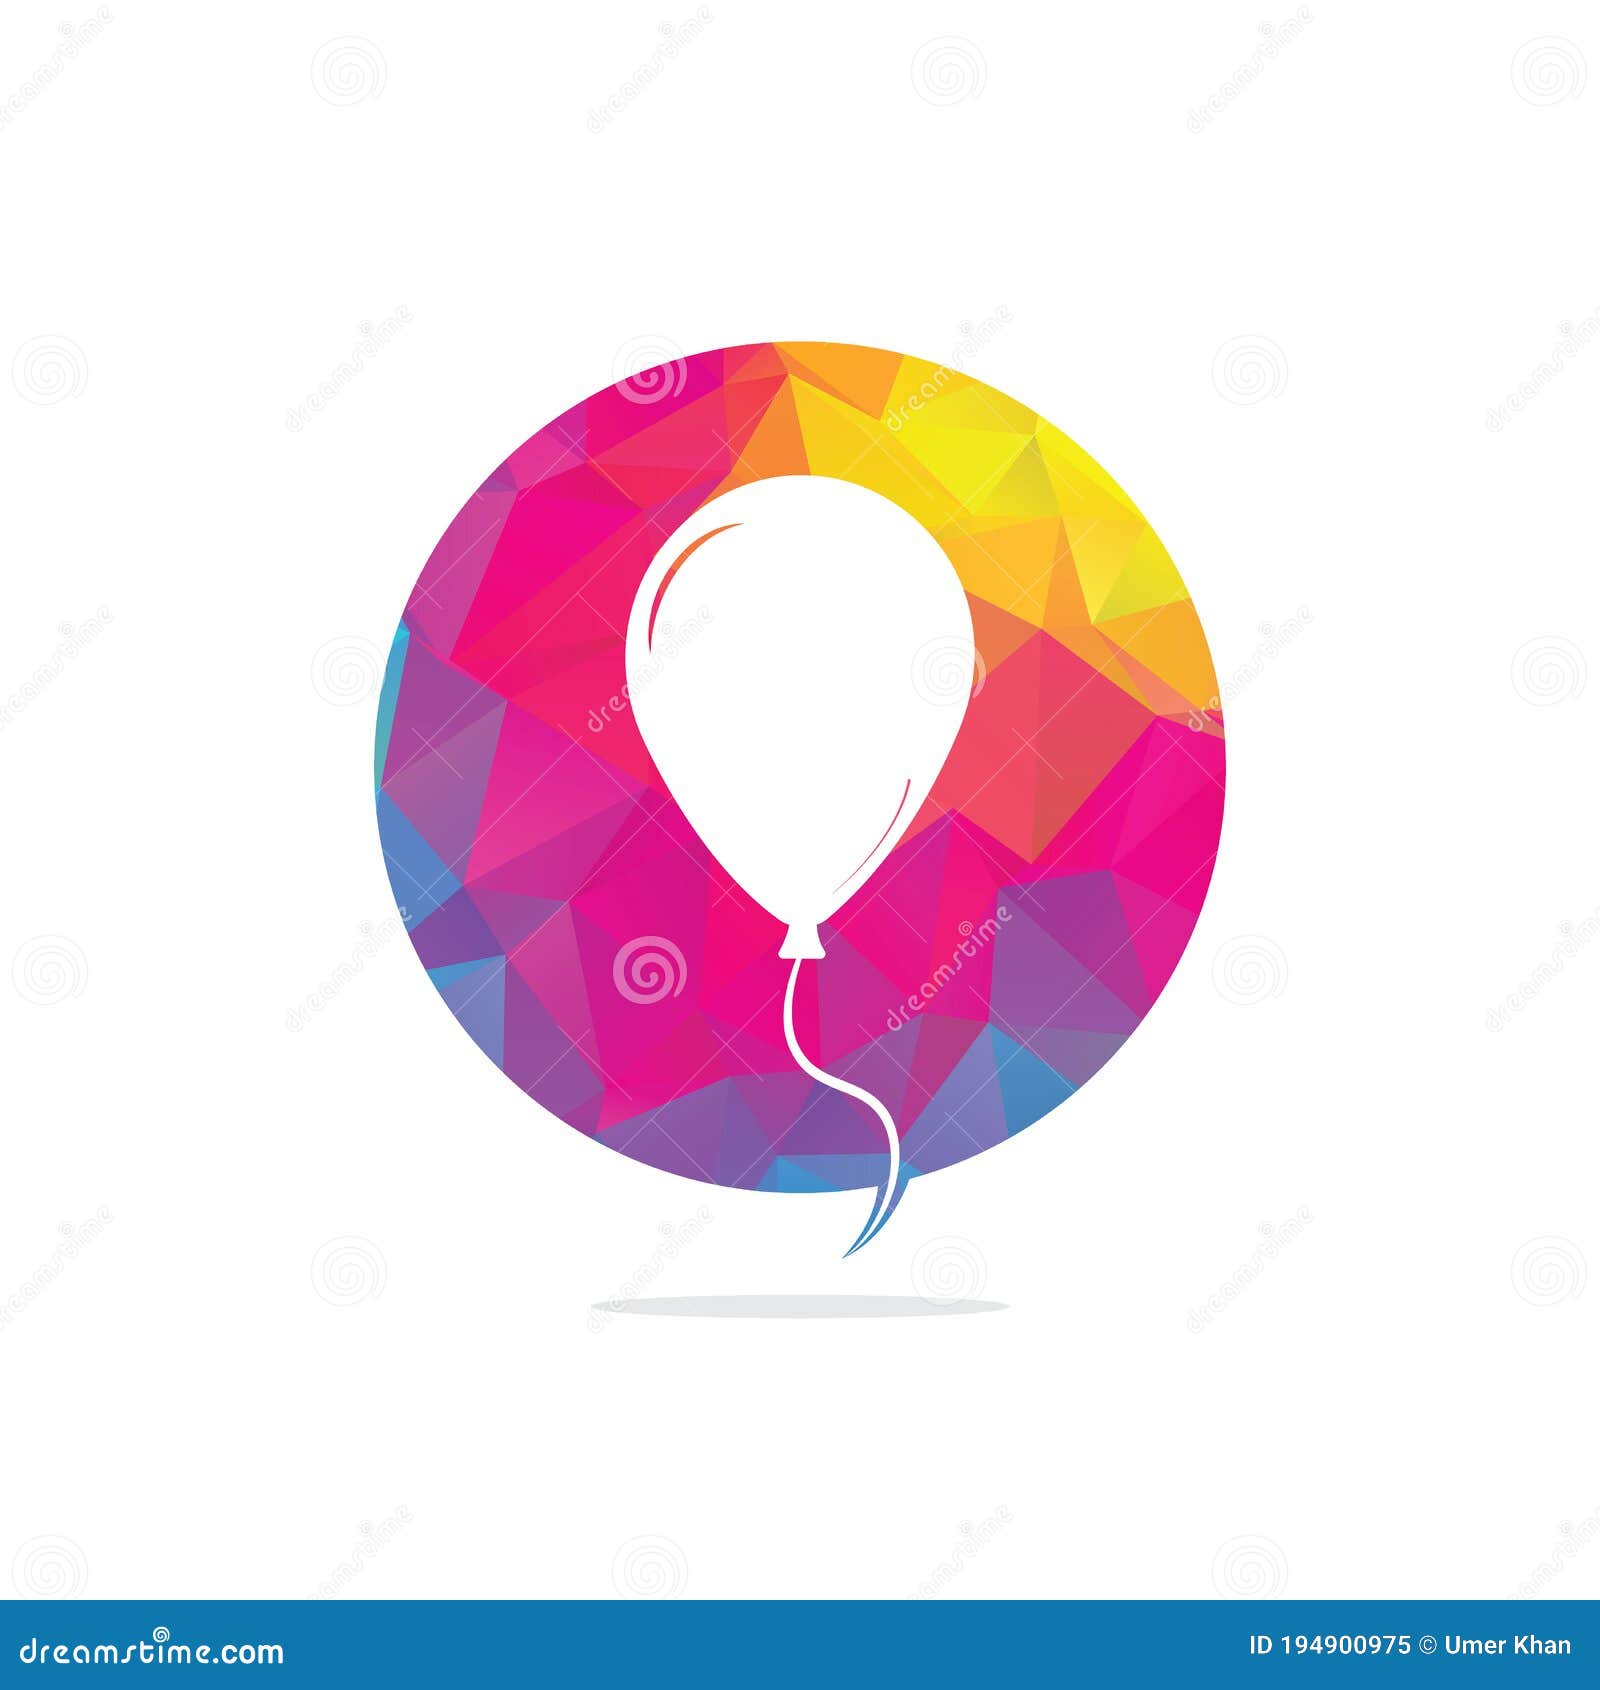 Elegant, Playful Logo Design for Balloon, Decor & More by creative.bugs |  Design #22166637